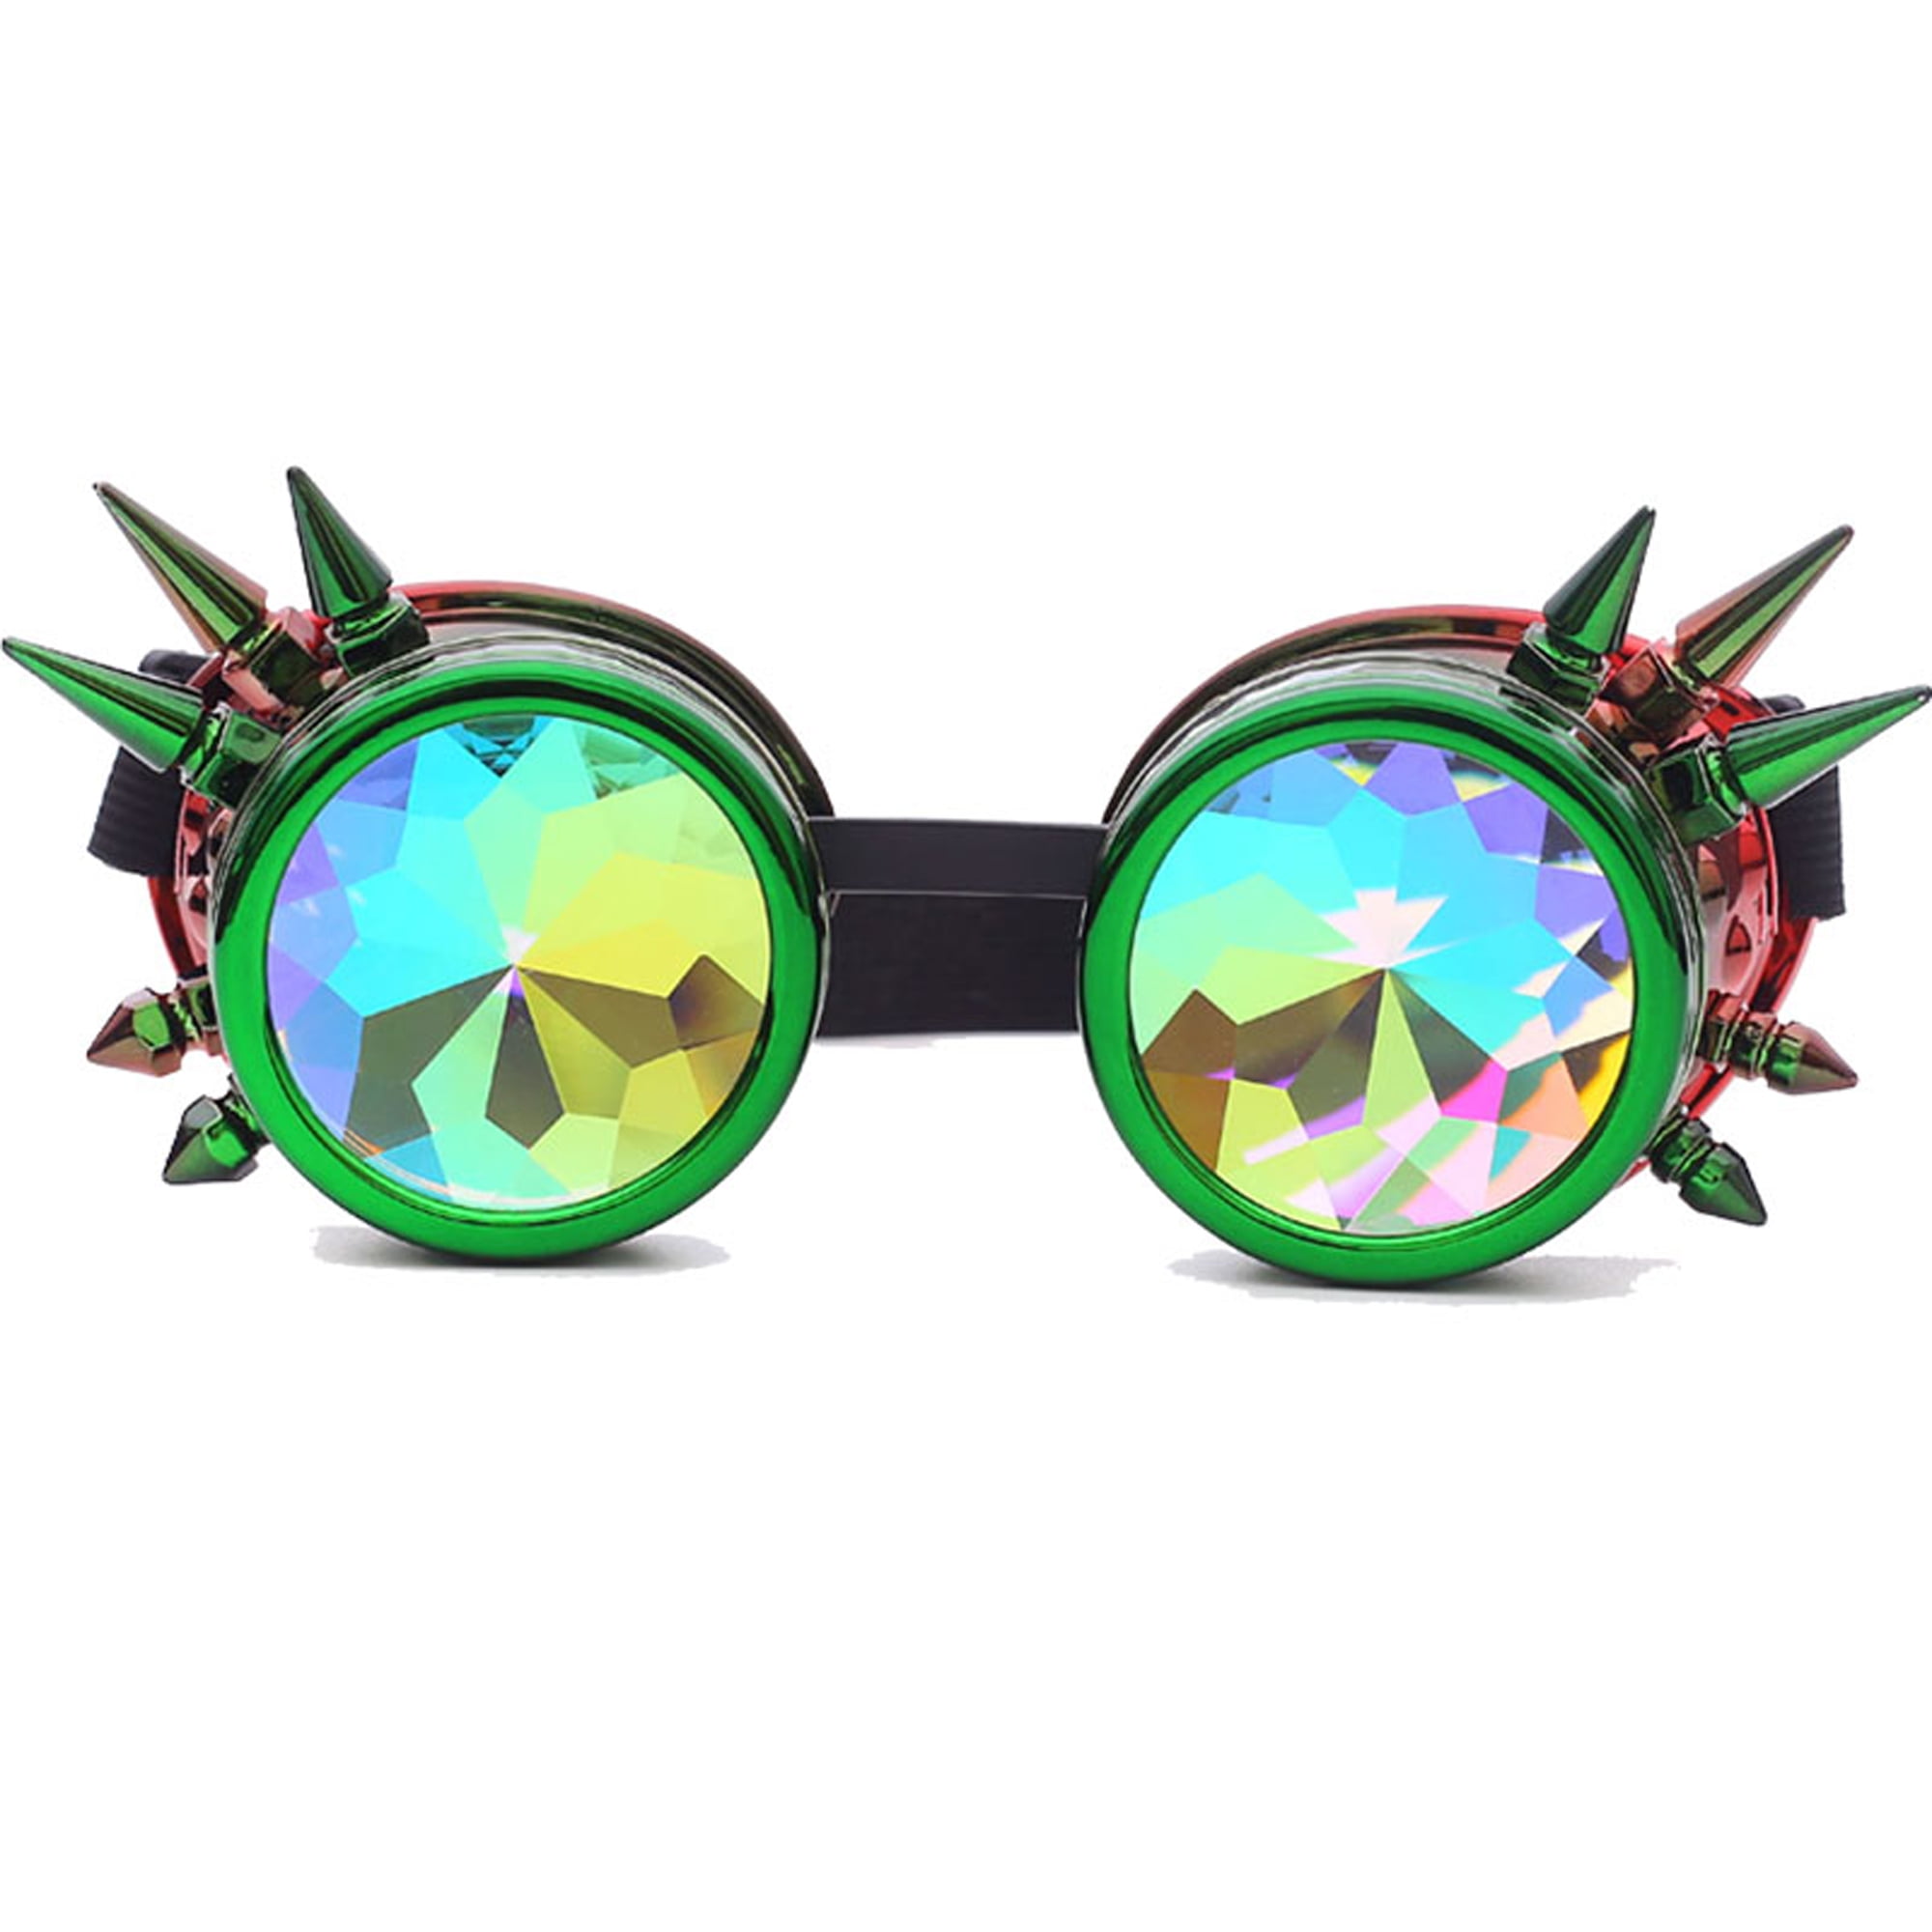 BONNIO Kaleidoscope Rainbow Steampunk Goggles Crystal Lenses Welding Eye Protect Vintage Glasses 